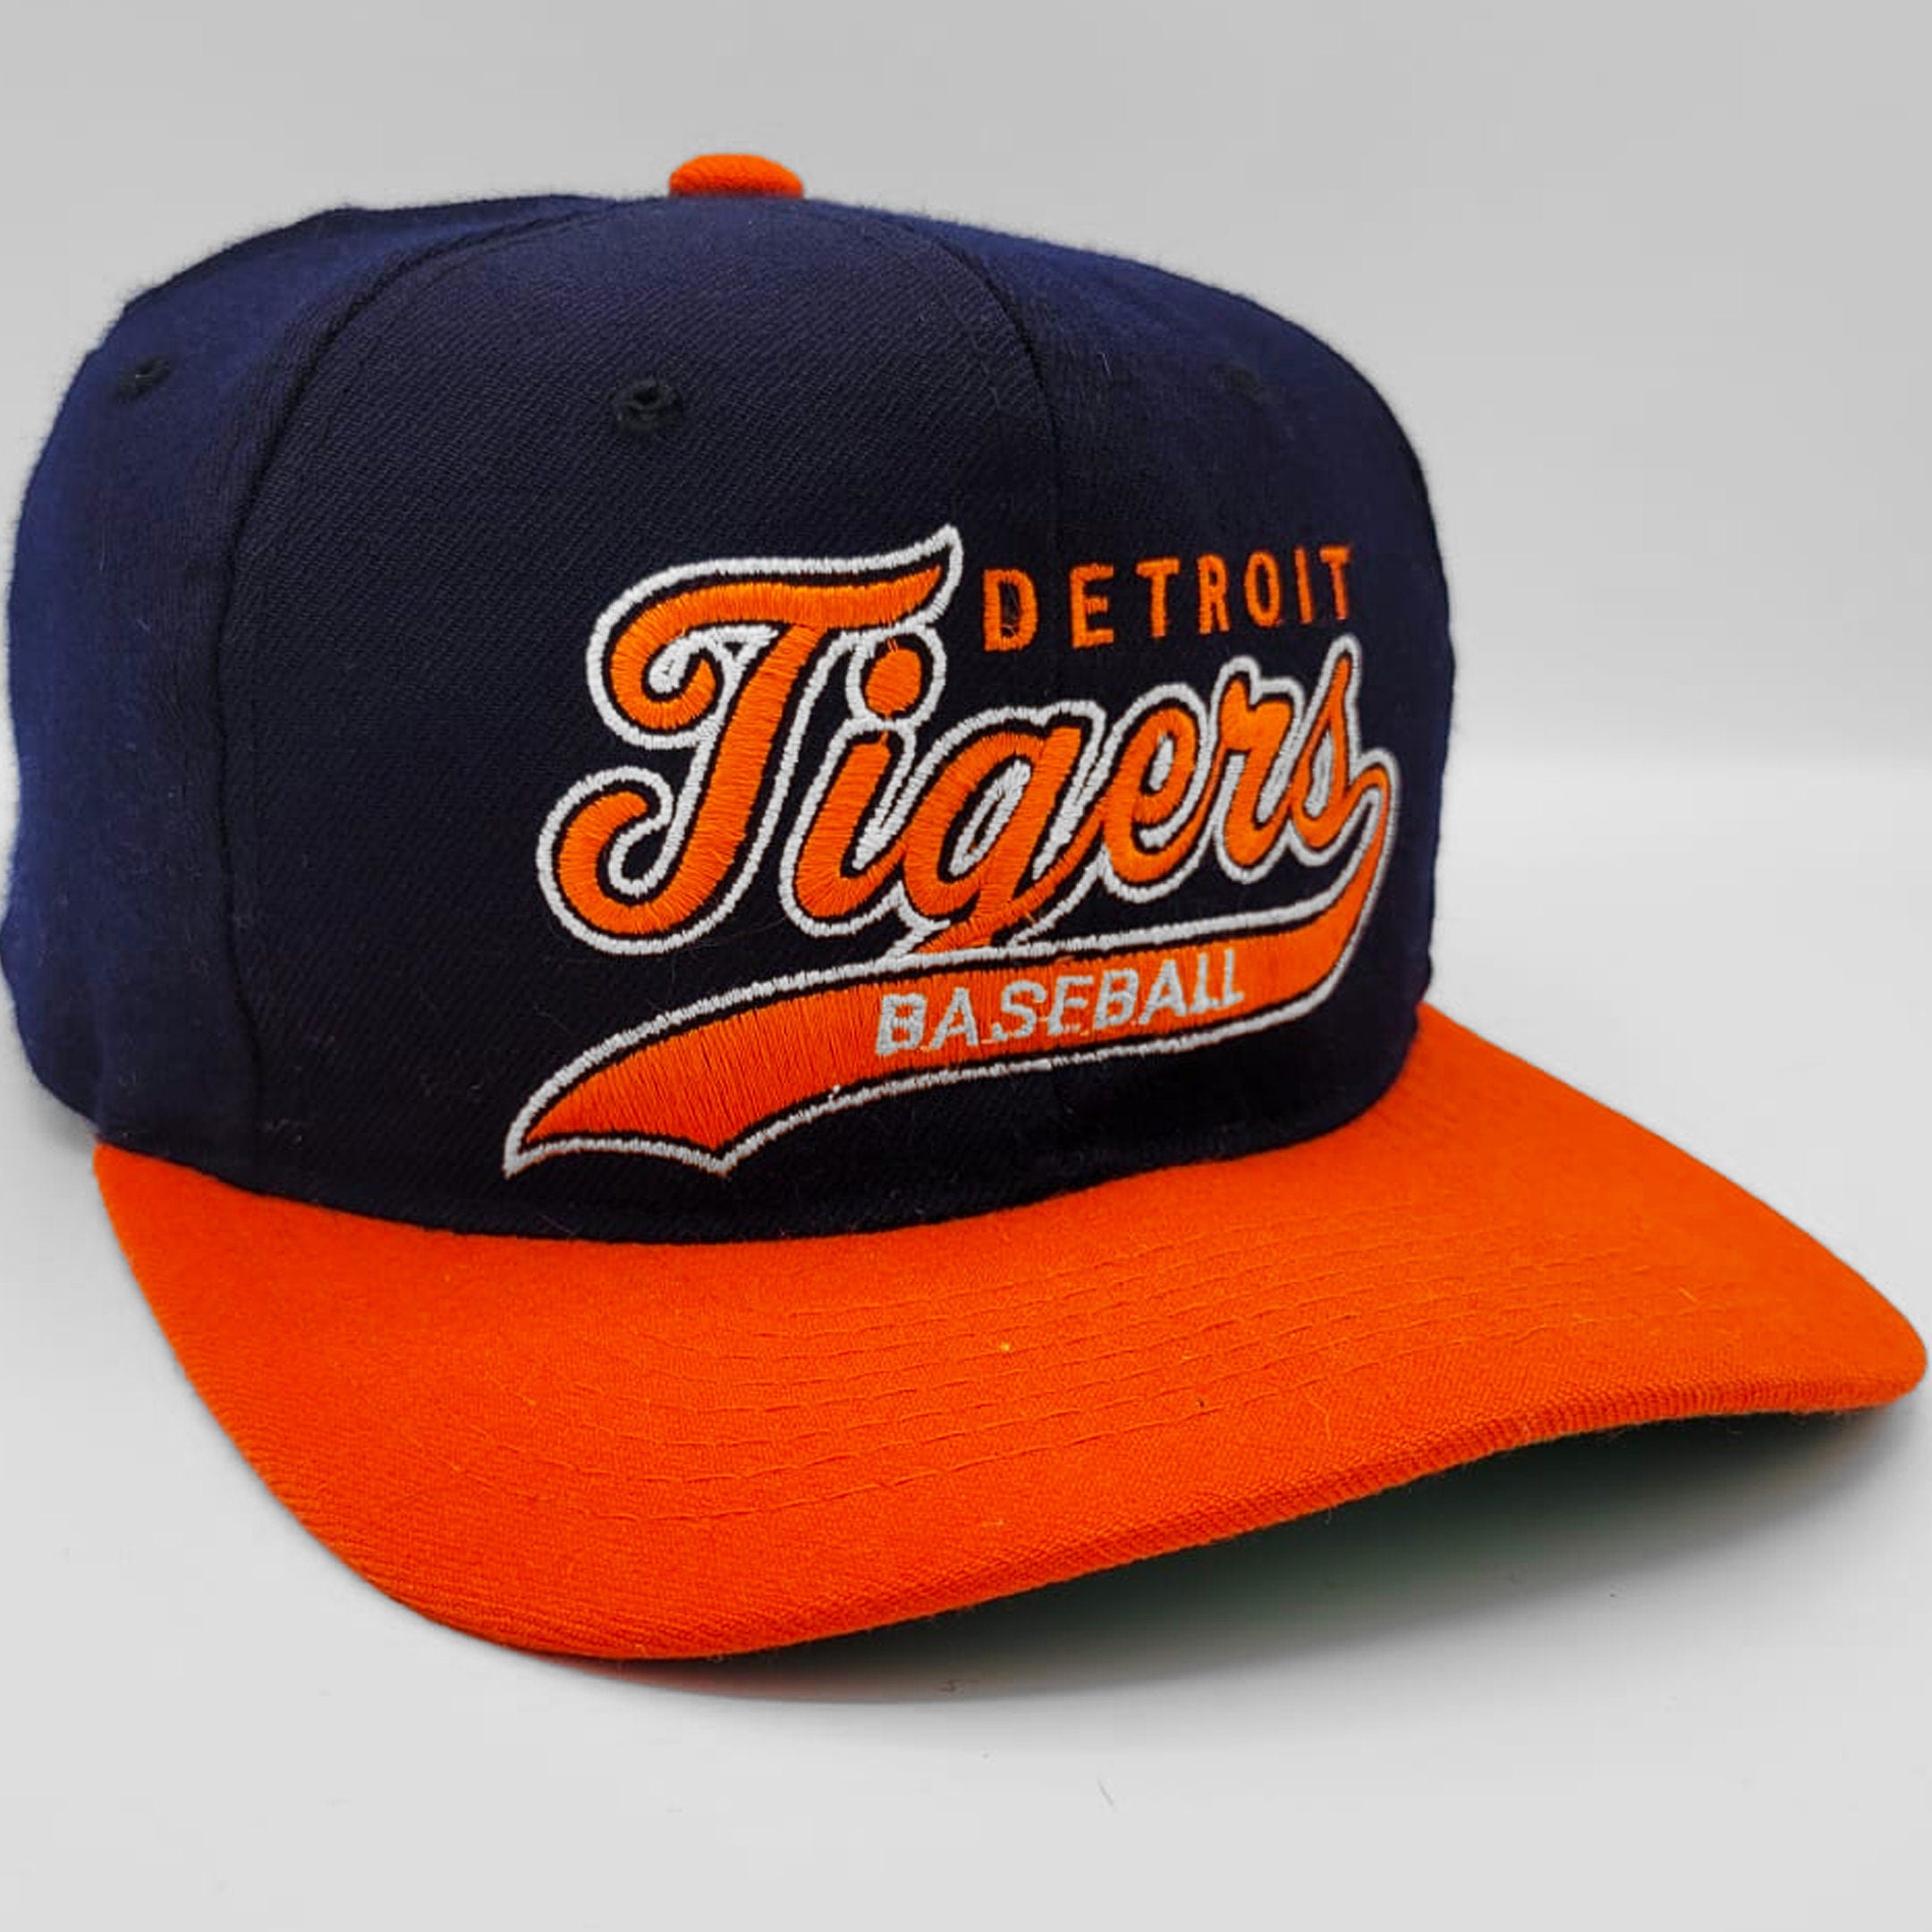 Vintage 1980's Detroit Tigers Pillbox Snapback Hat